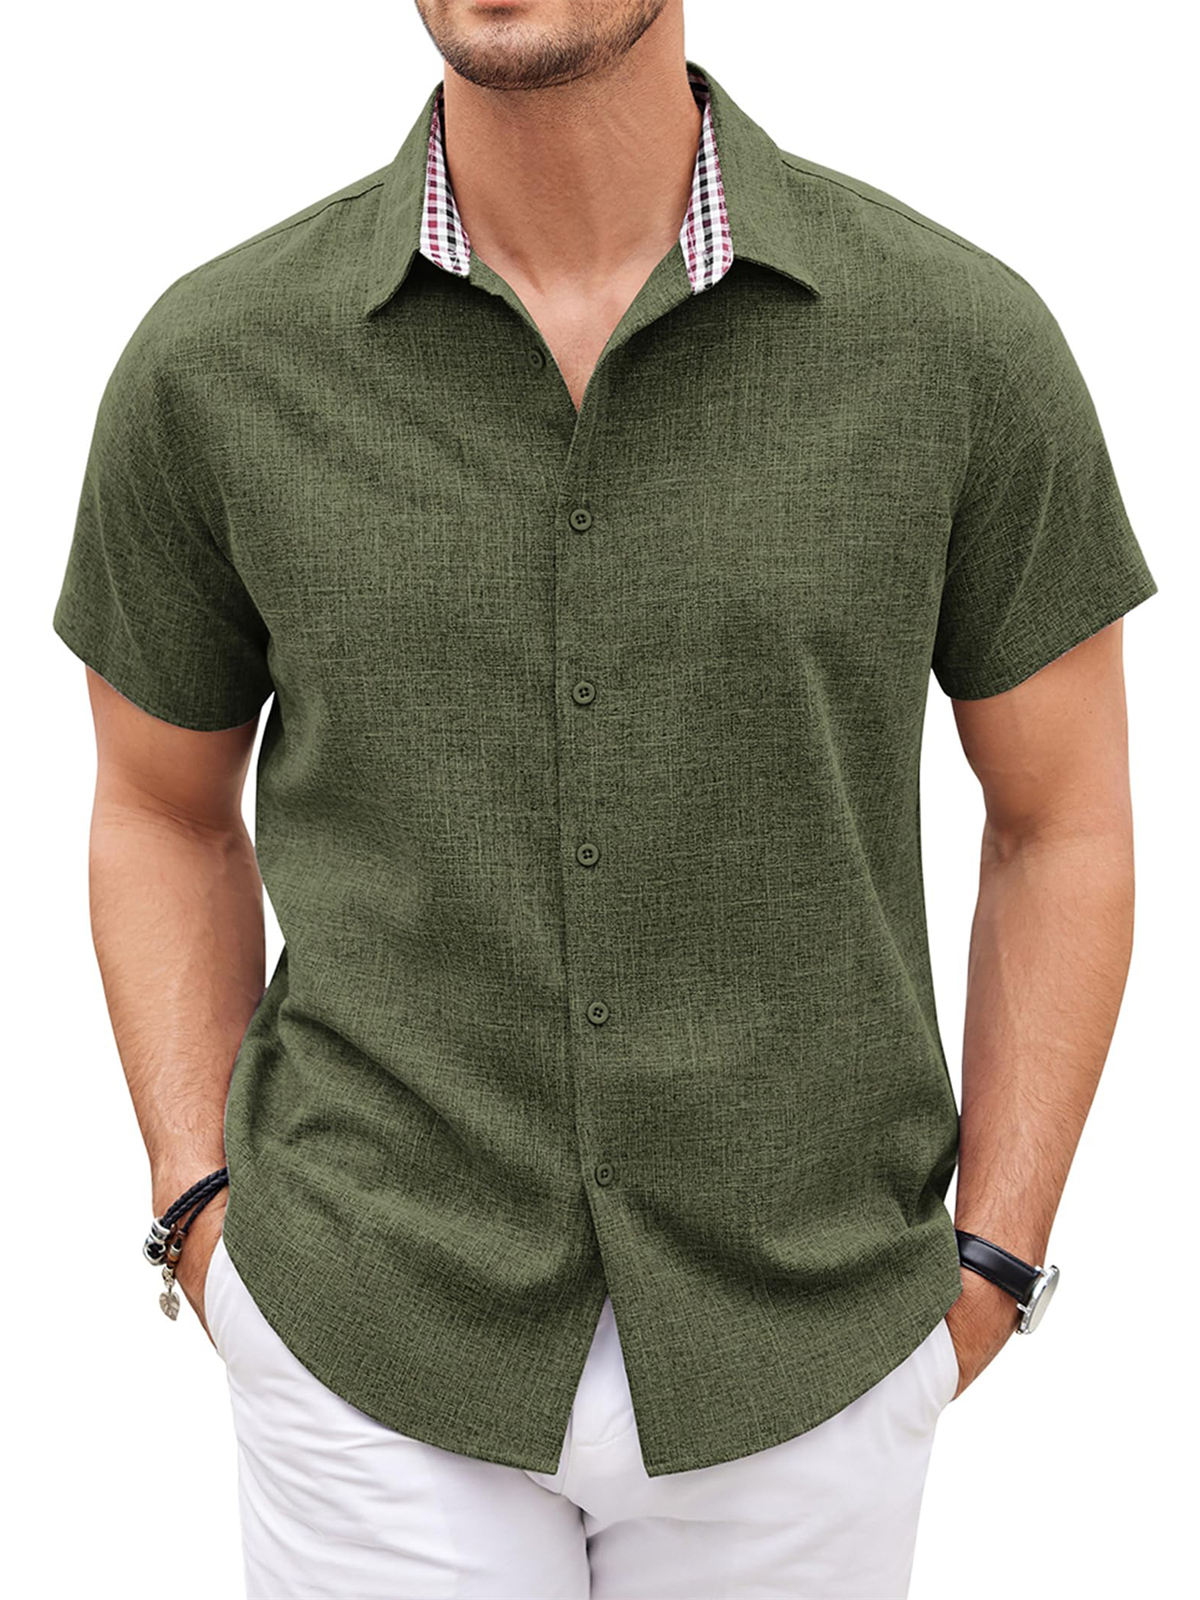 Mens Linen Shirt Short Sleeve Button Down Shirts Casual Plaid Collar Summer Beach Shirts